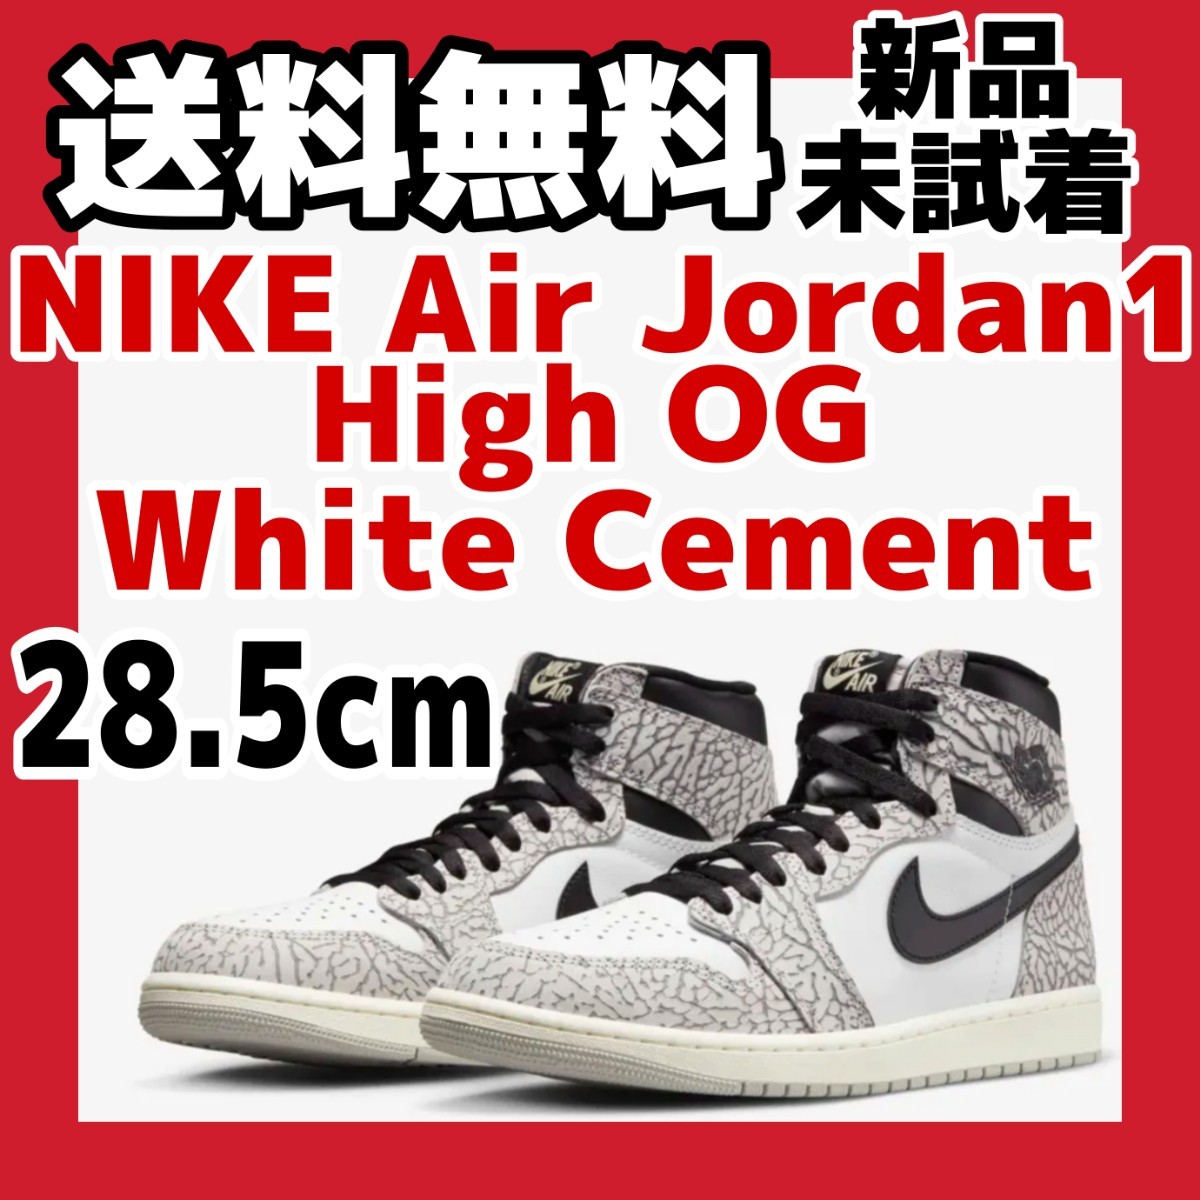 28.5cm Nike Air Jordan 1 RETRO High OG White Cementナイキ エアジョーダン1 レトロ ハイ OG ホワイト セメント グレー エレファント